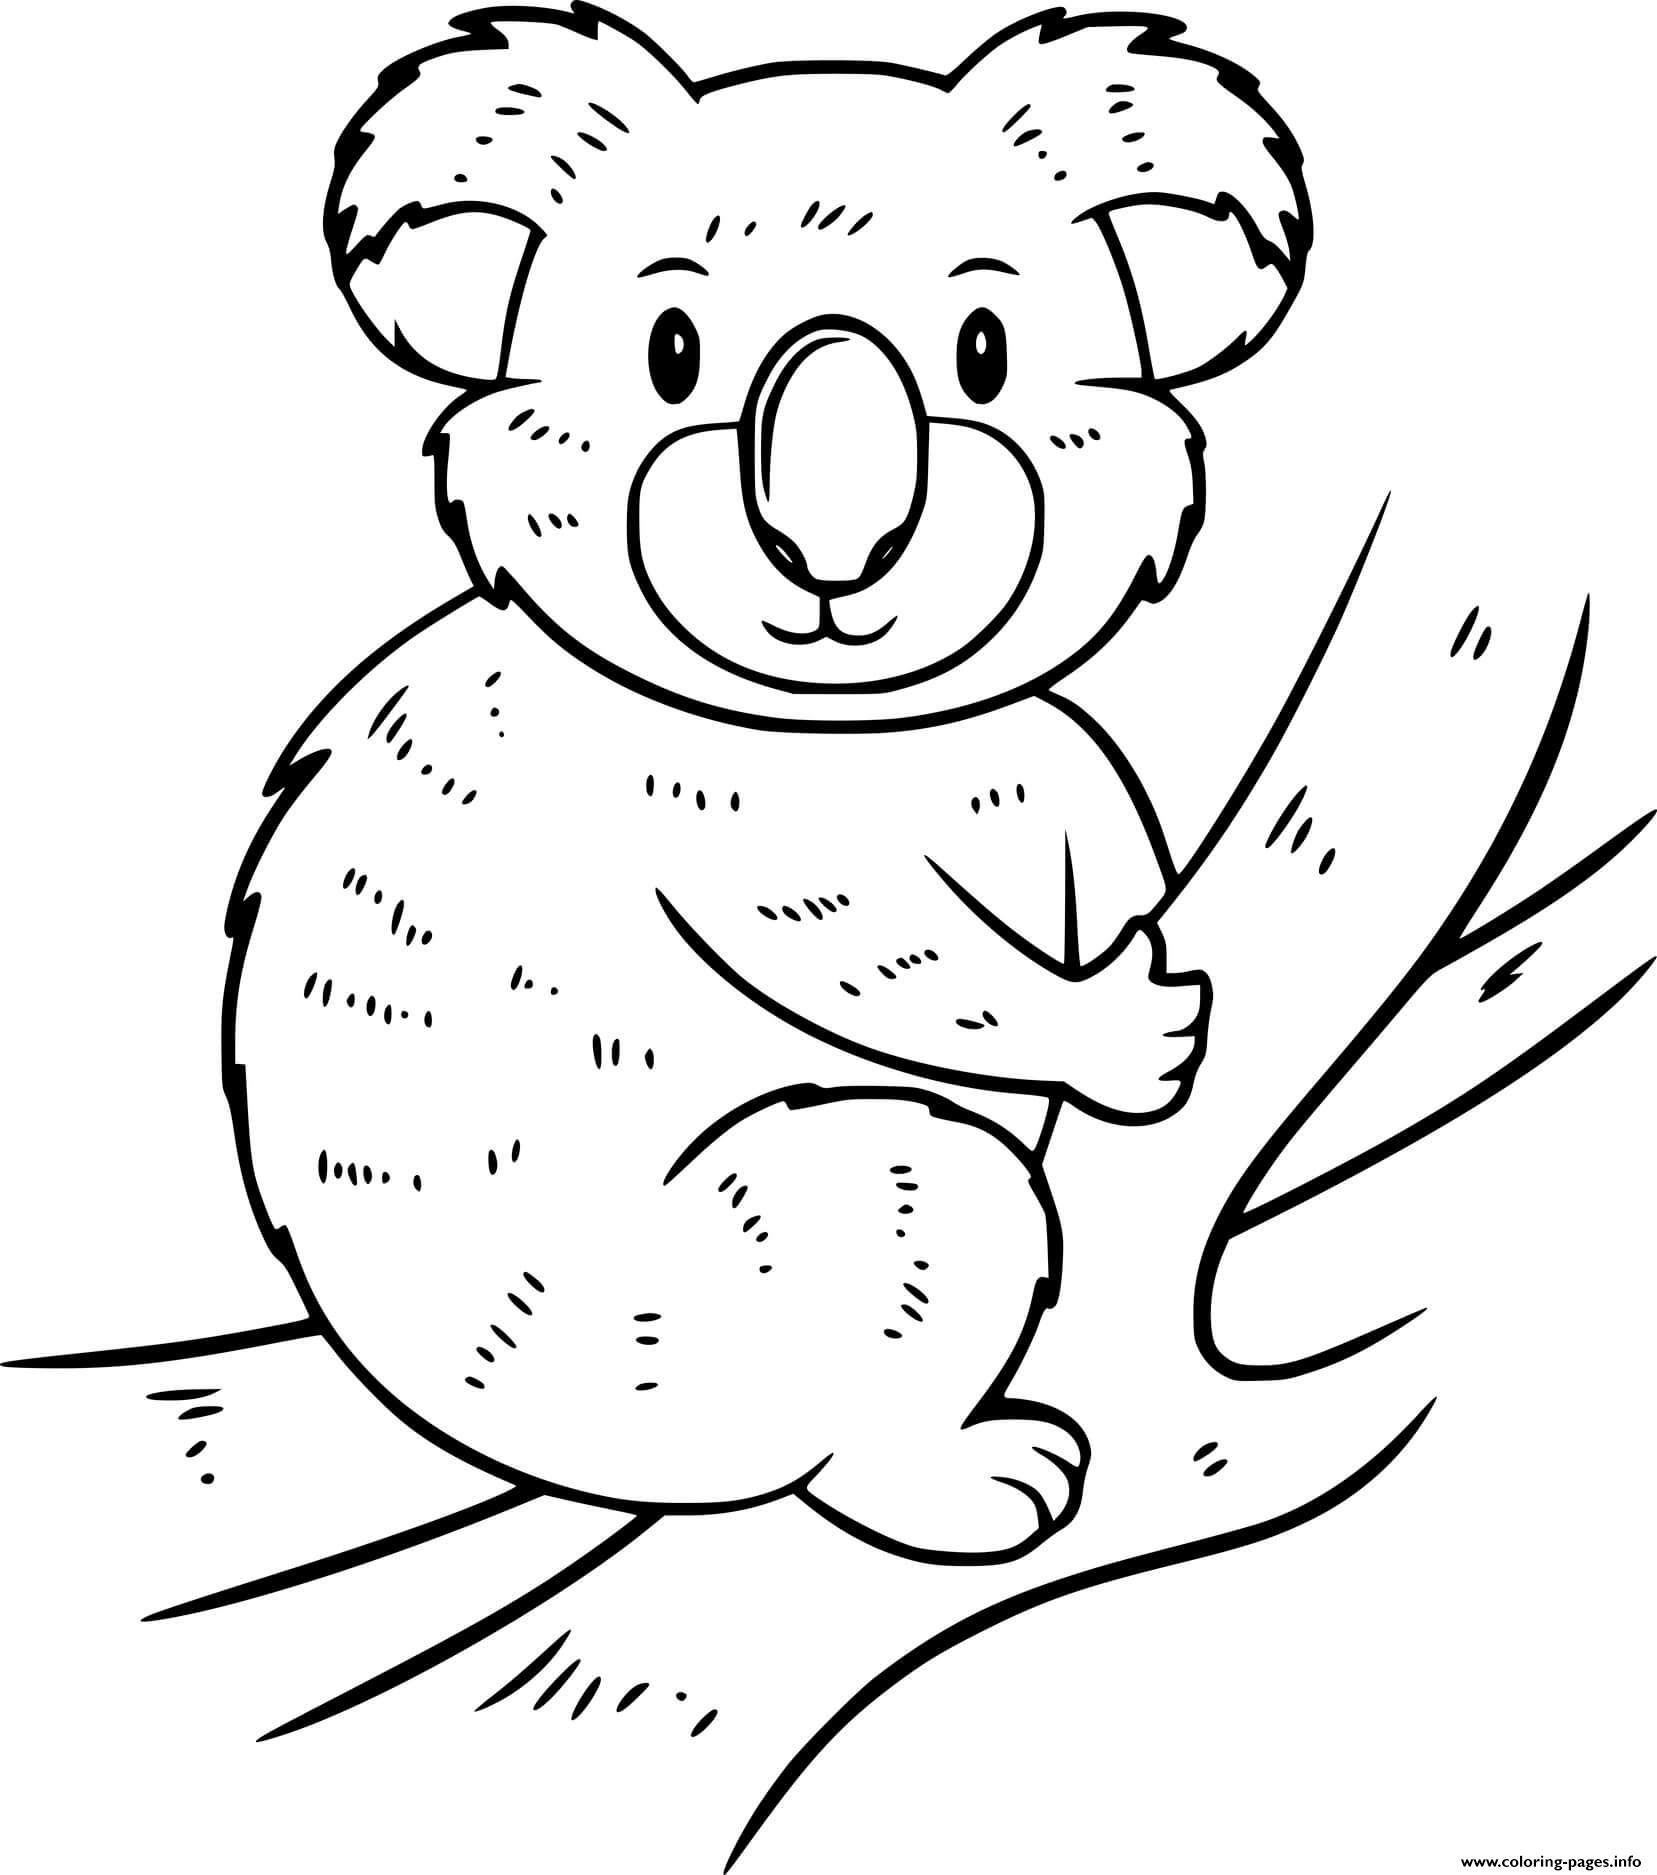 Koala Gets On The Tree coloring